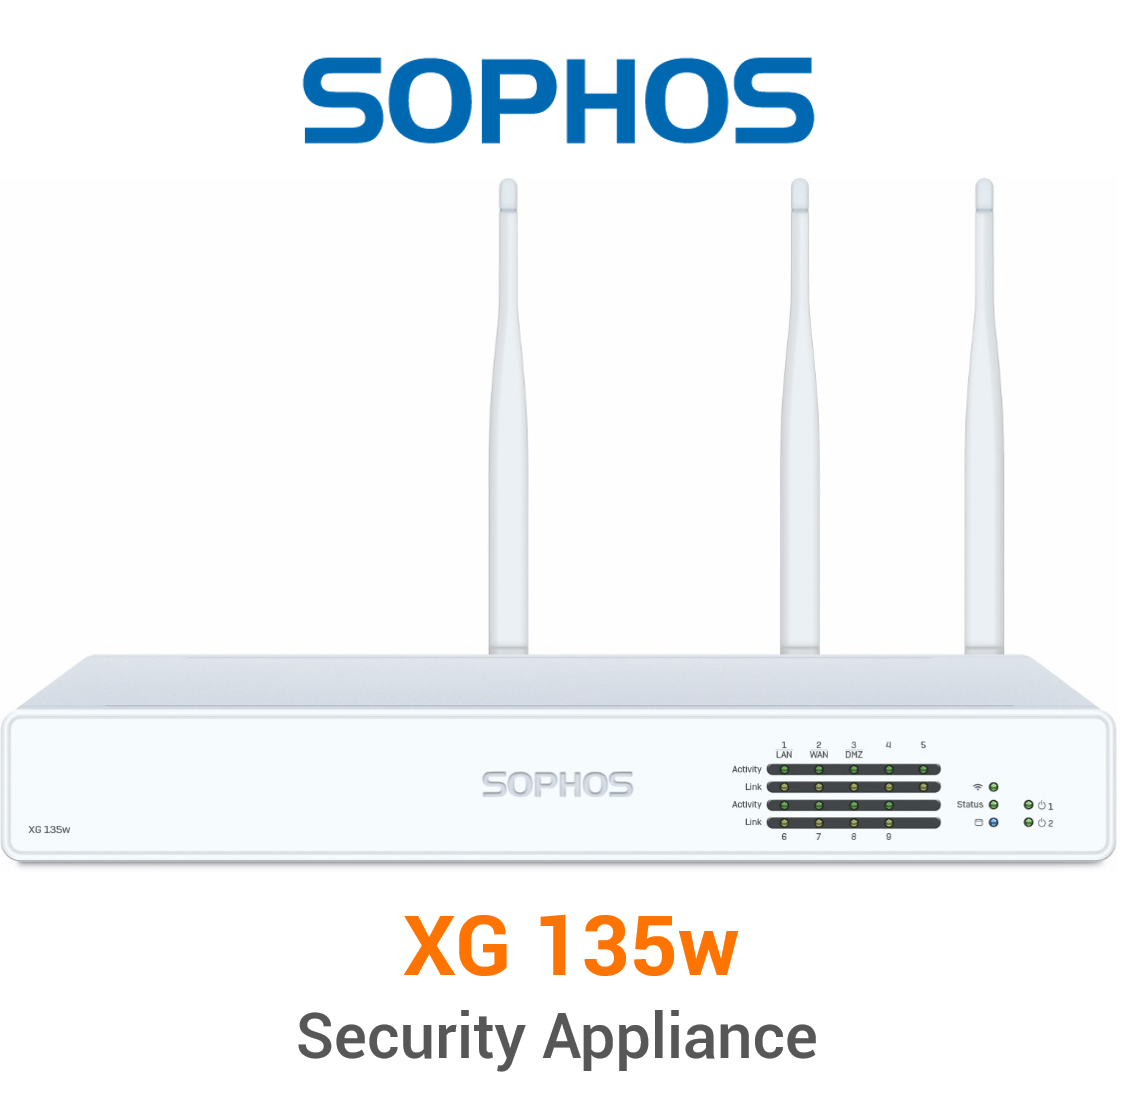 Sophos XG 135w Security Appliance